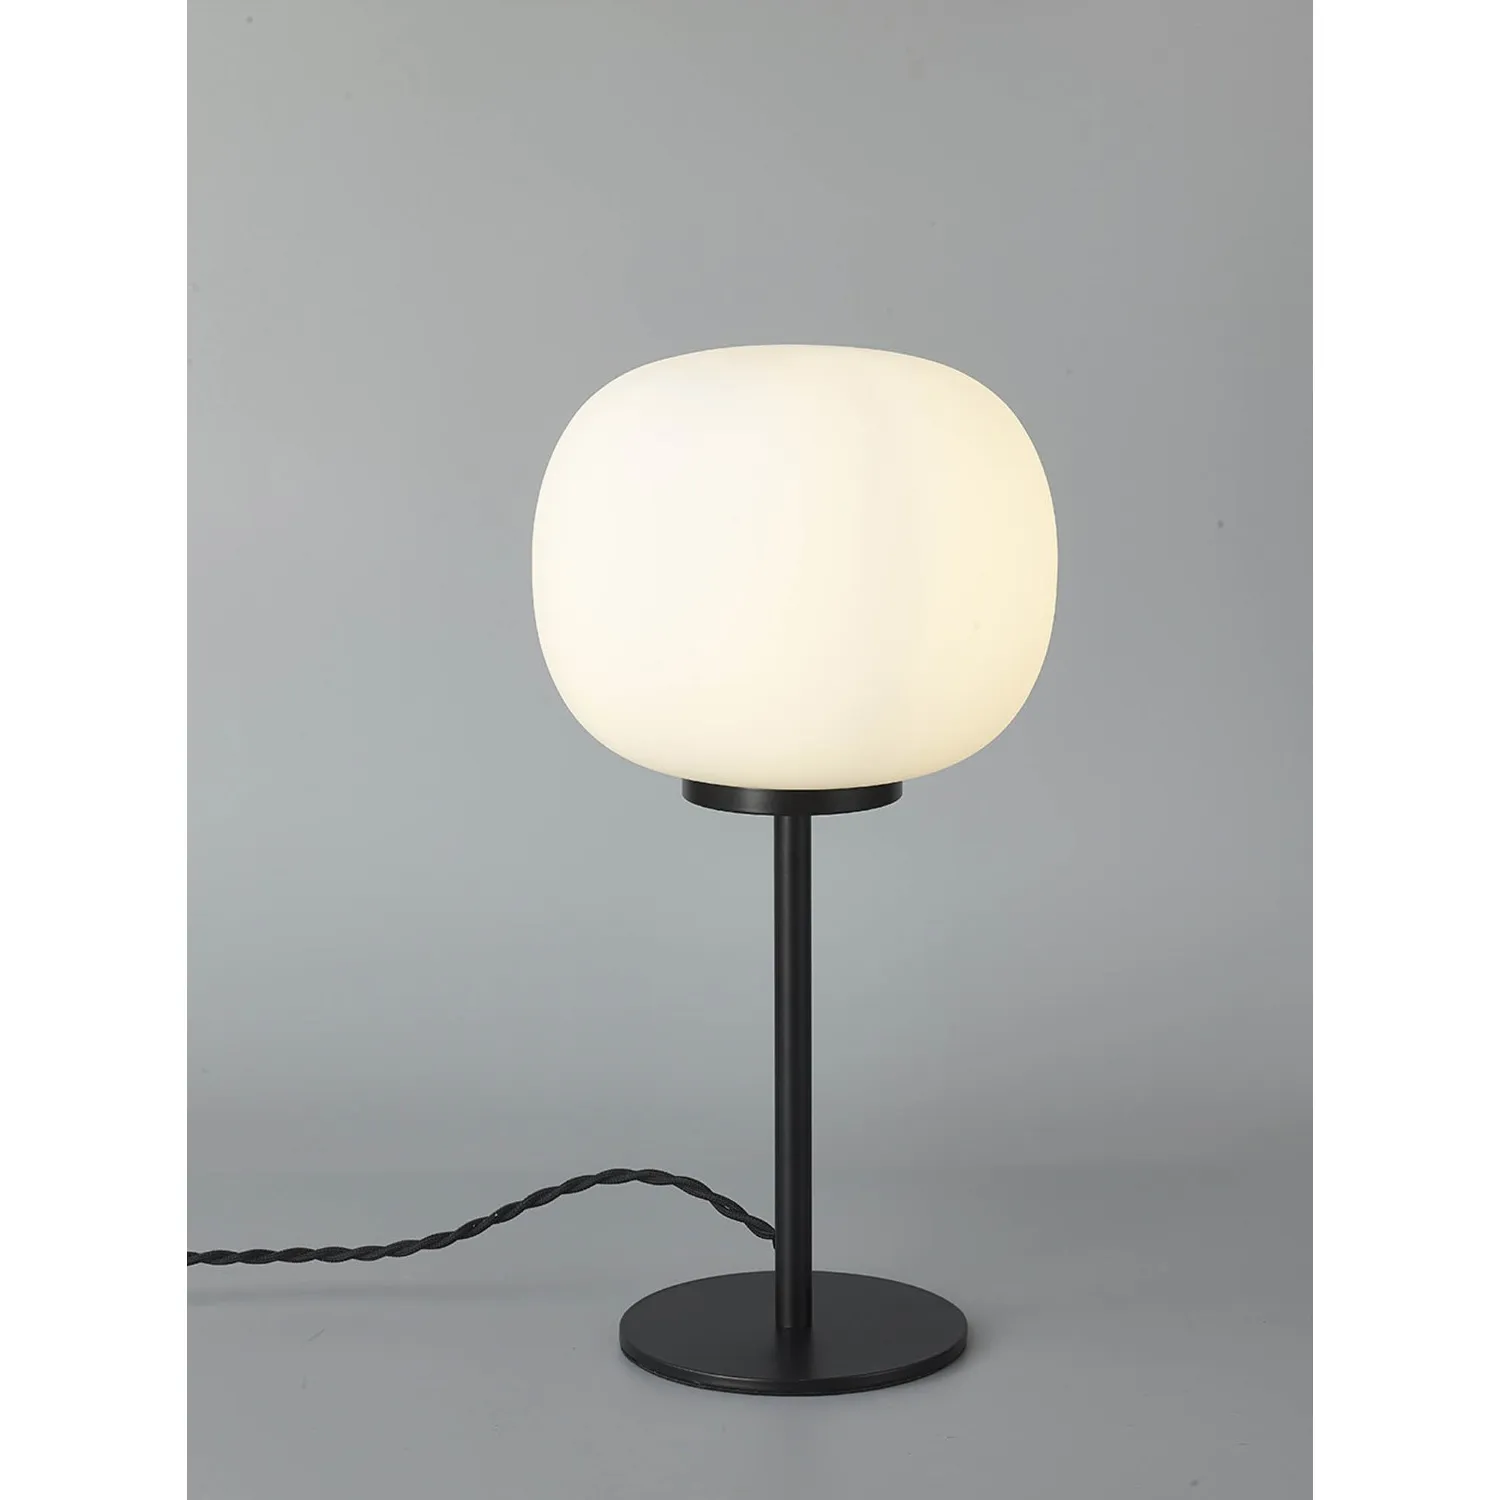 Sevenoaks Small Oval Ball Tall Table Lamp 1 Light E27 Matt Black Base With Frosted White Glass Globe